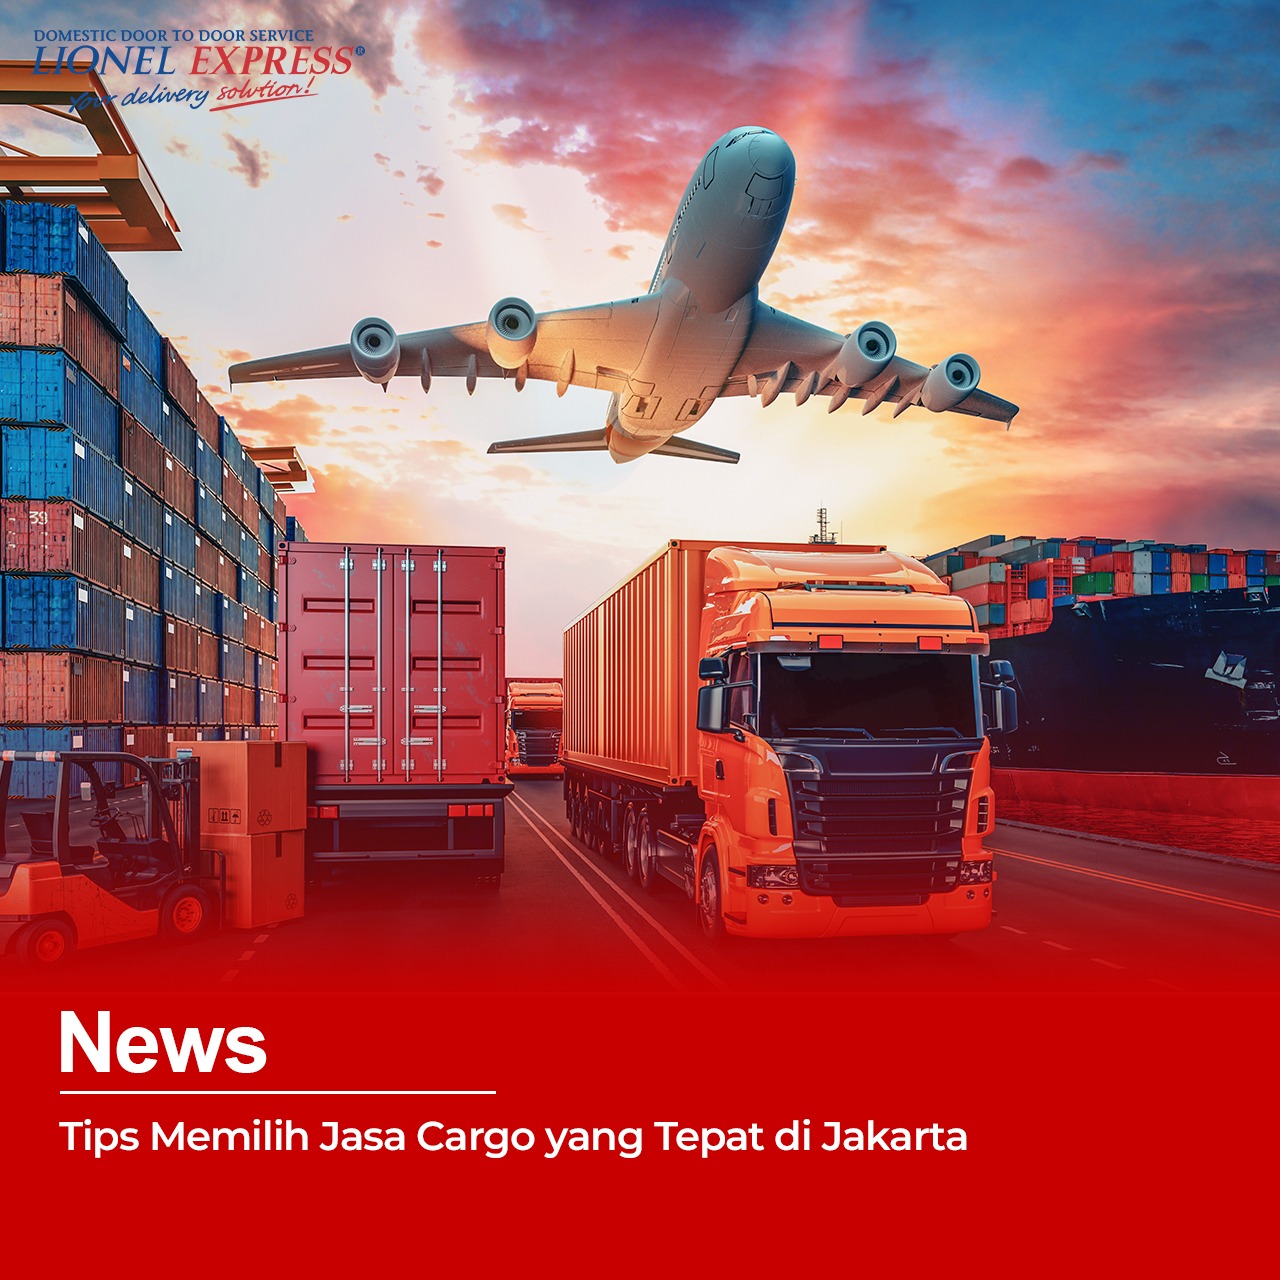 Tips Memilih Jasa Cargo yang Tepat di Jakarta